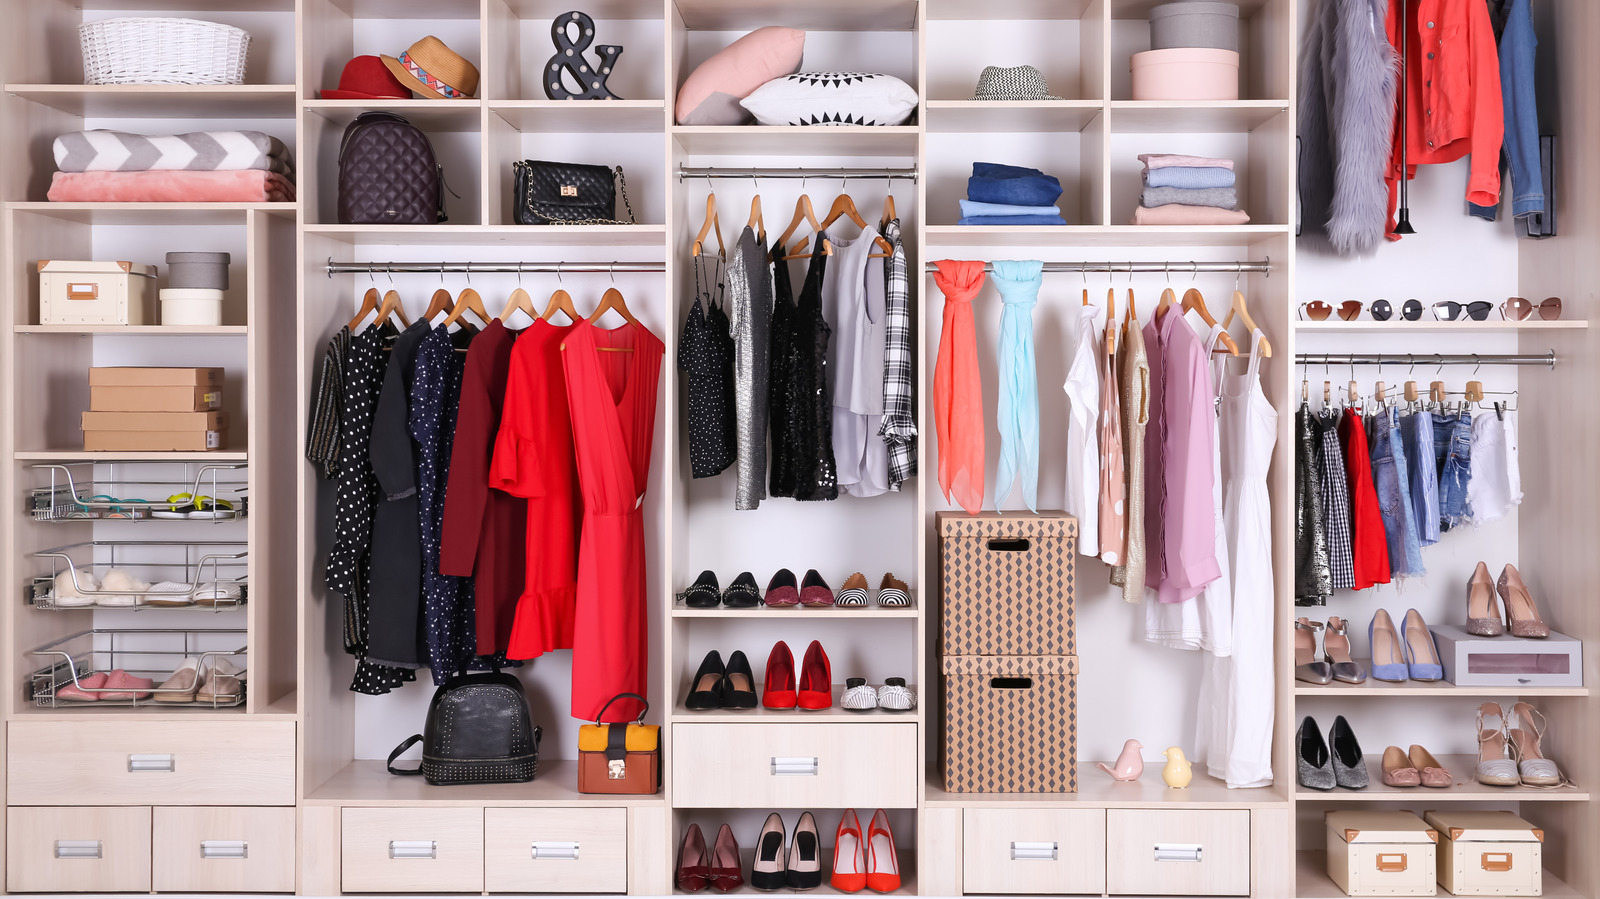 12 Best Coat Closet Organization Tips, According to Professional Organizers